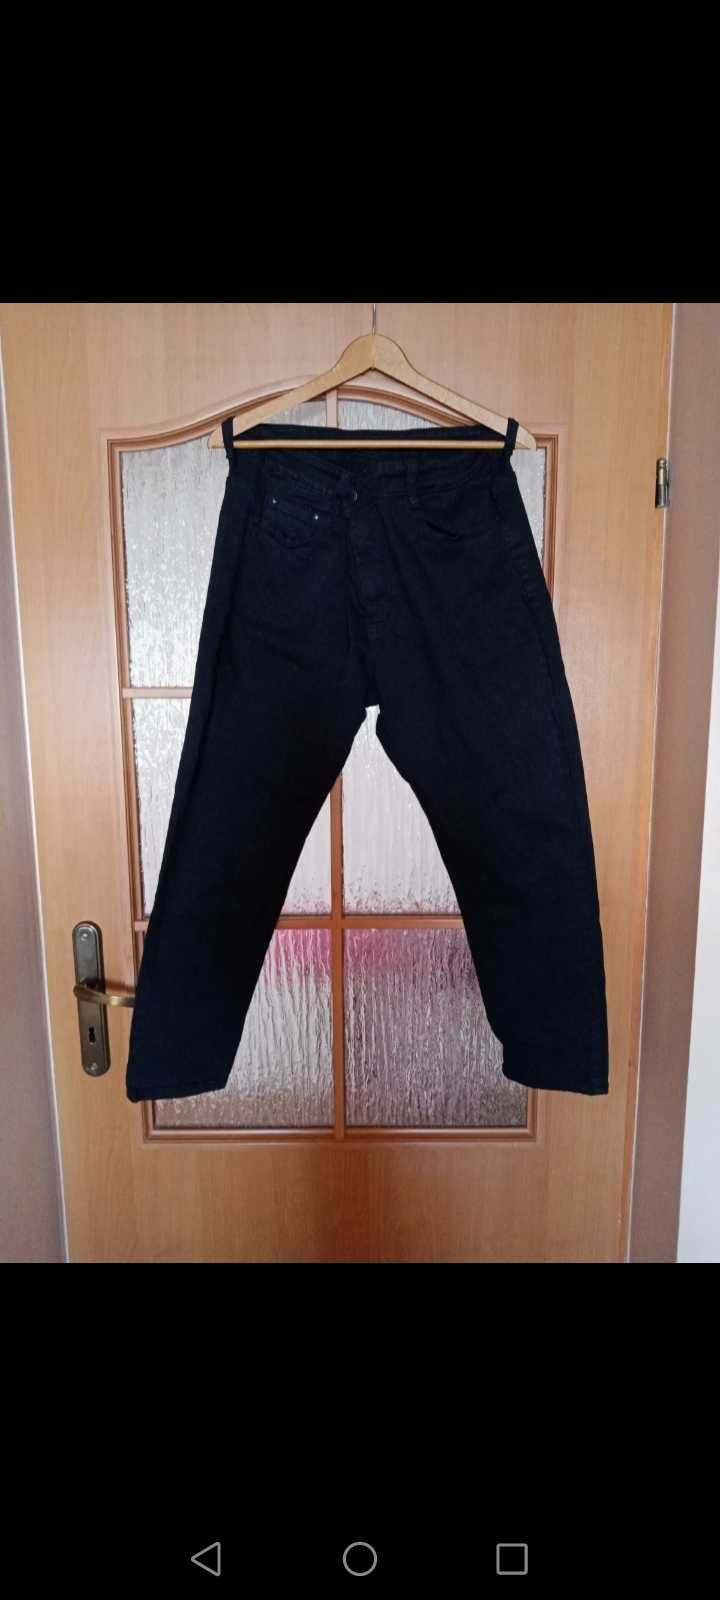 Spodnie jeansy czarne rozm 46 do kostki